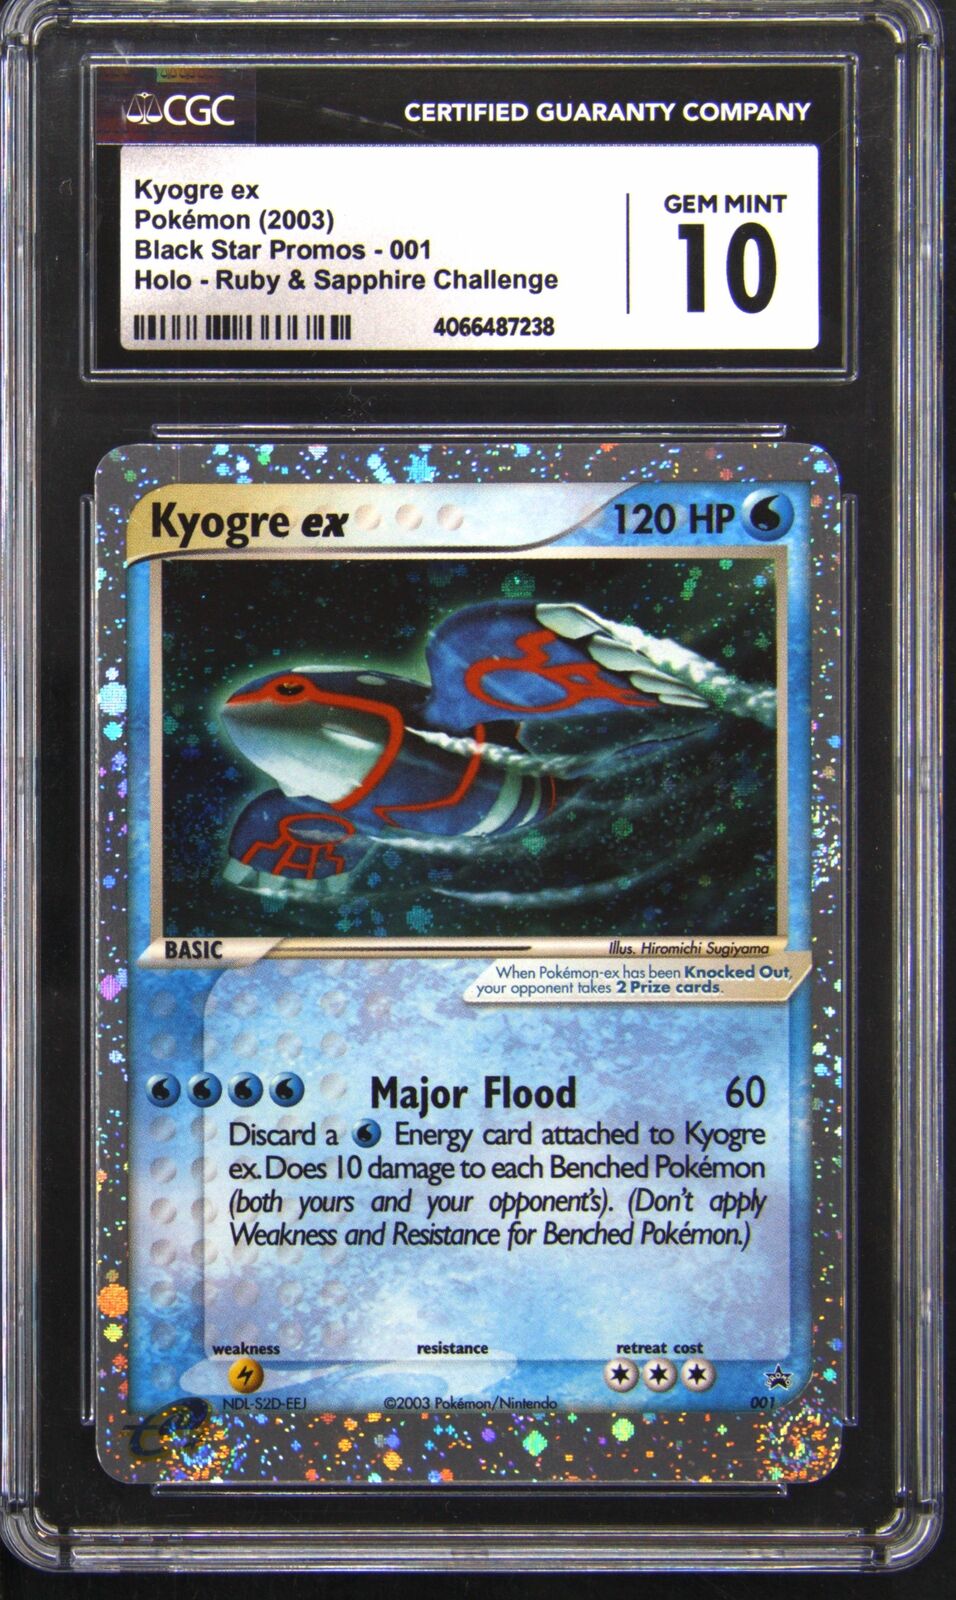 2003 001 Kyogre ex Promo Pokemon TCG Card CGC 10 Gem Mint